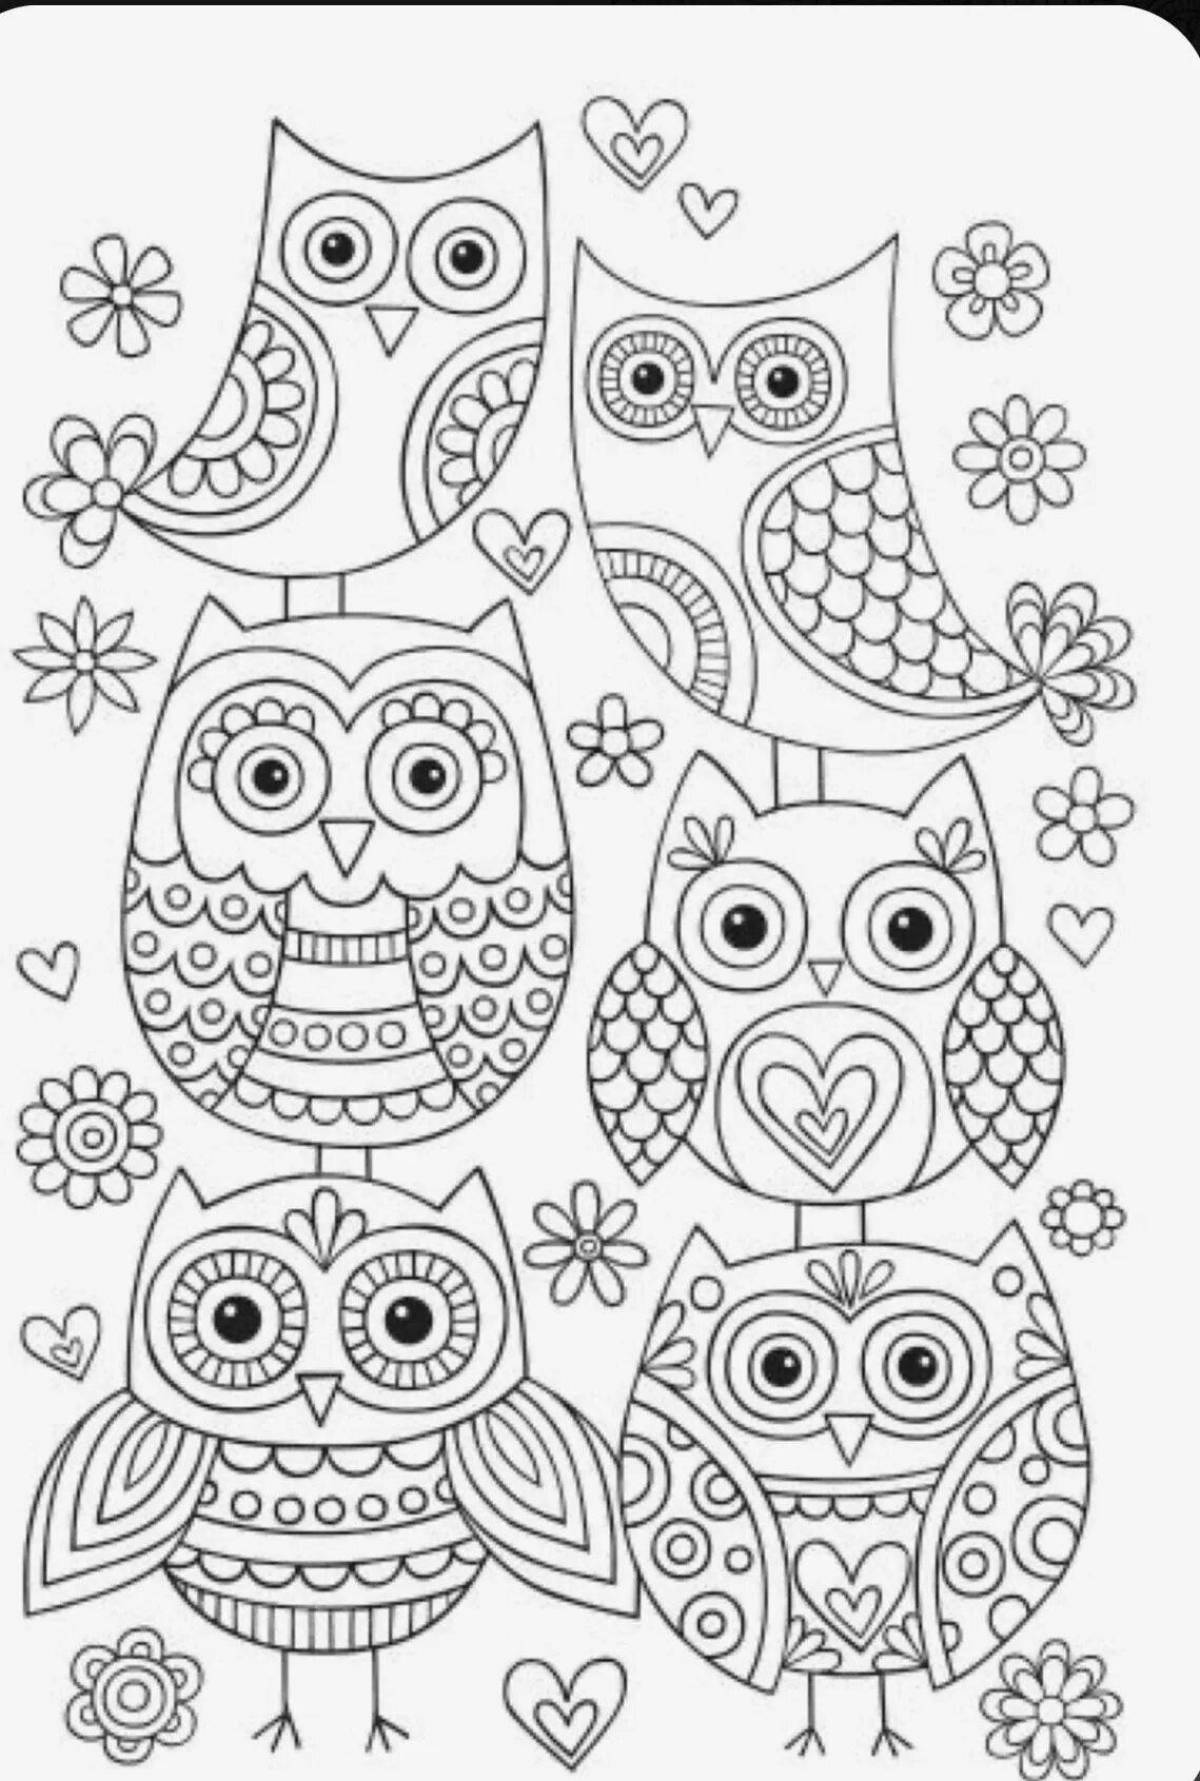 Coloring cute anti-stress owls